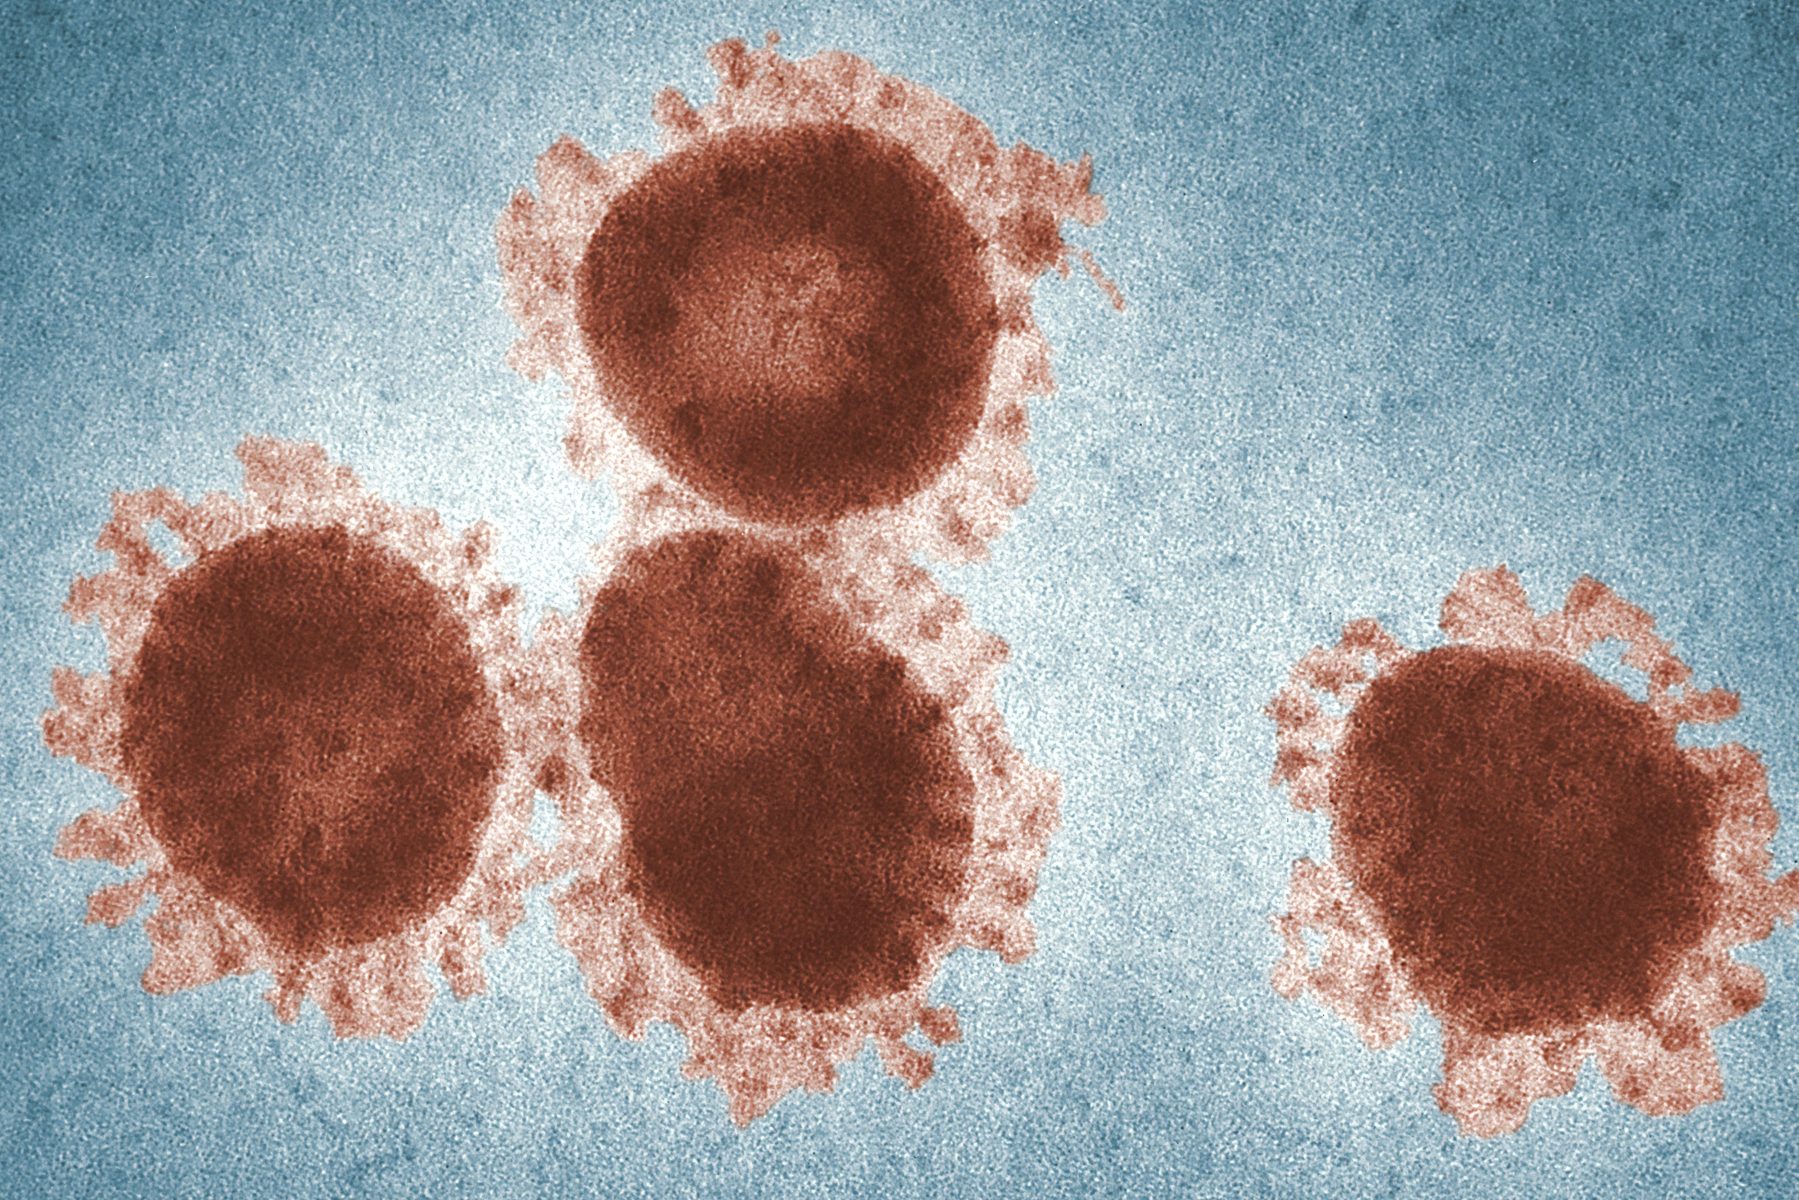 Imagem de um vírus da família Coronavirus (via Unsplash/CDC)